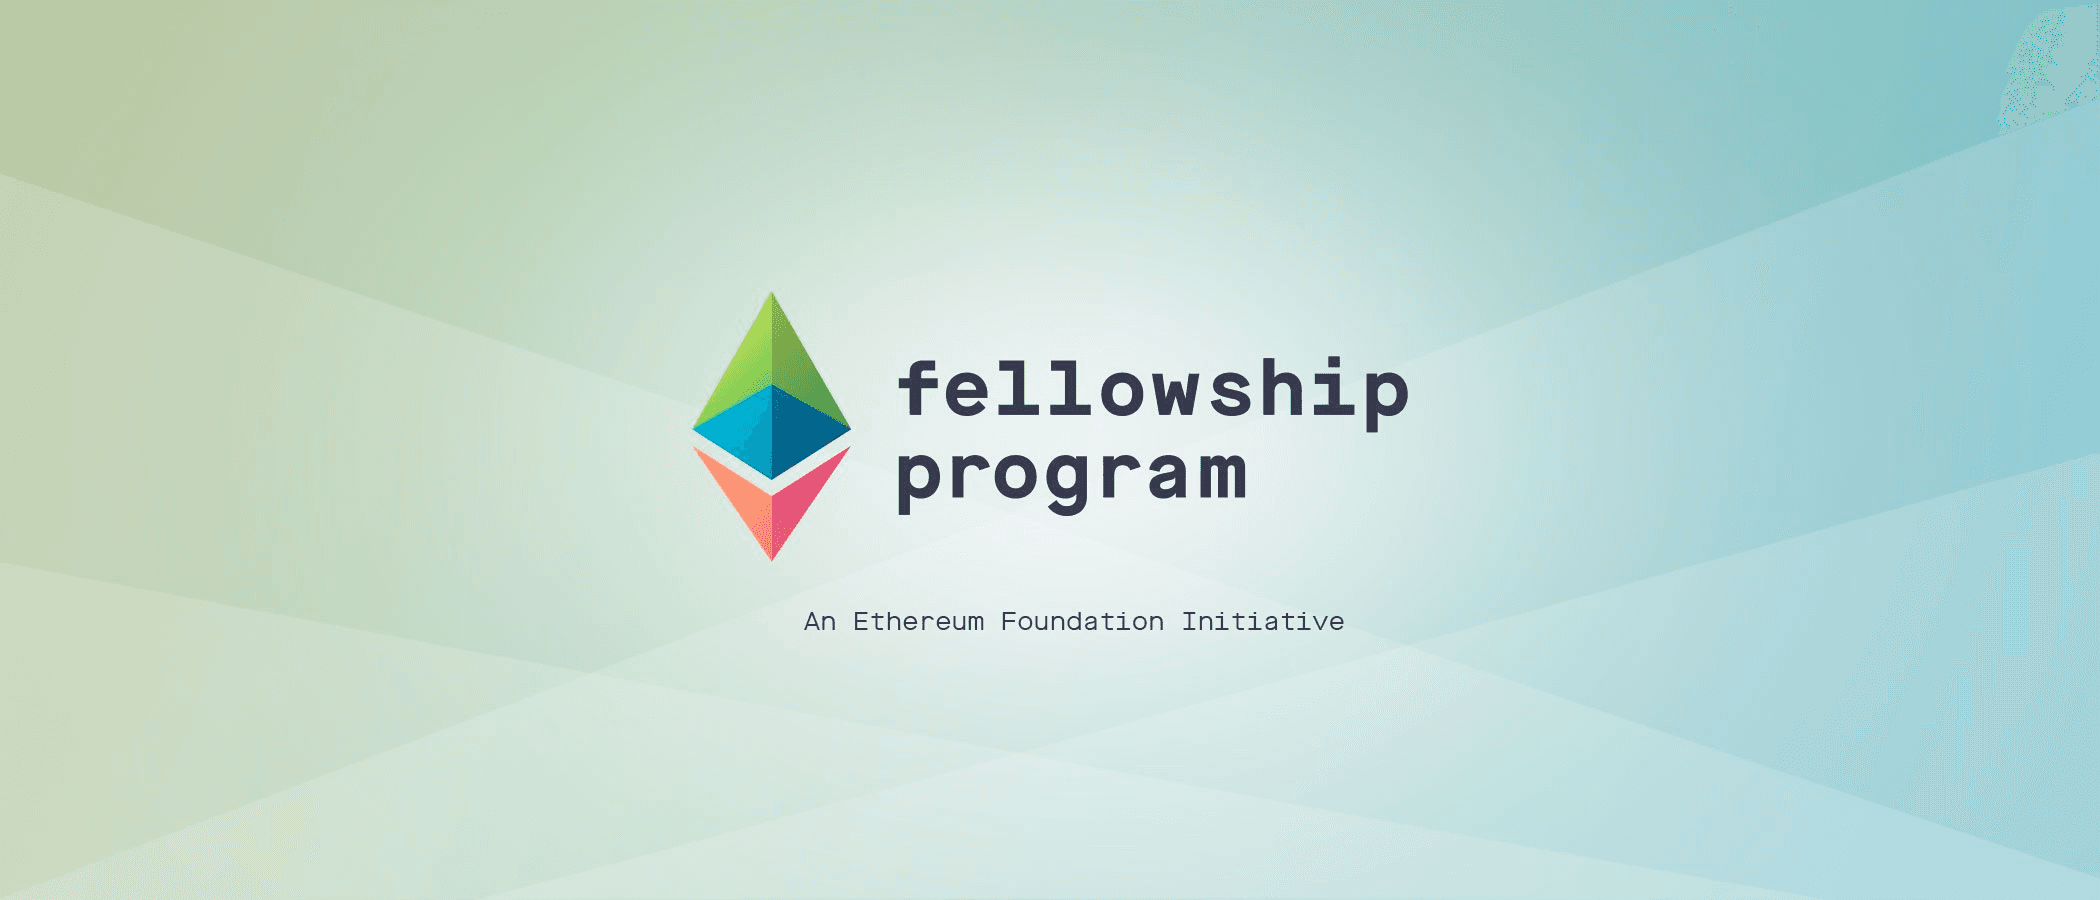 Programme de Fellowship: Cohorte #2 Demandes ouvertes & Cohorte #1 Tour d'horizon